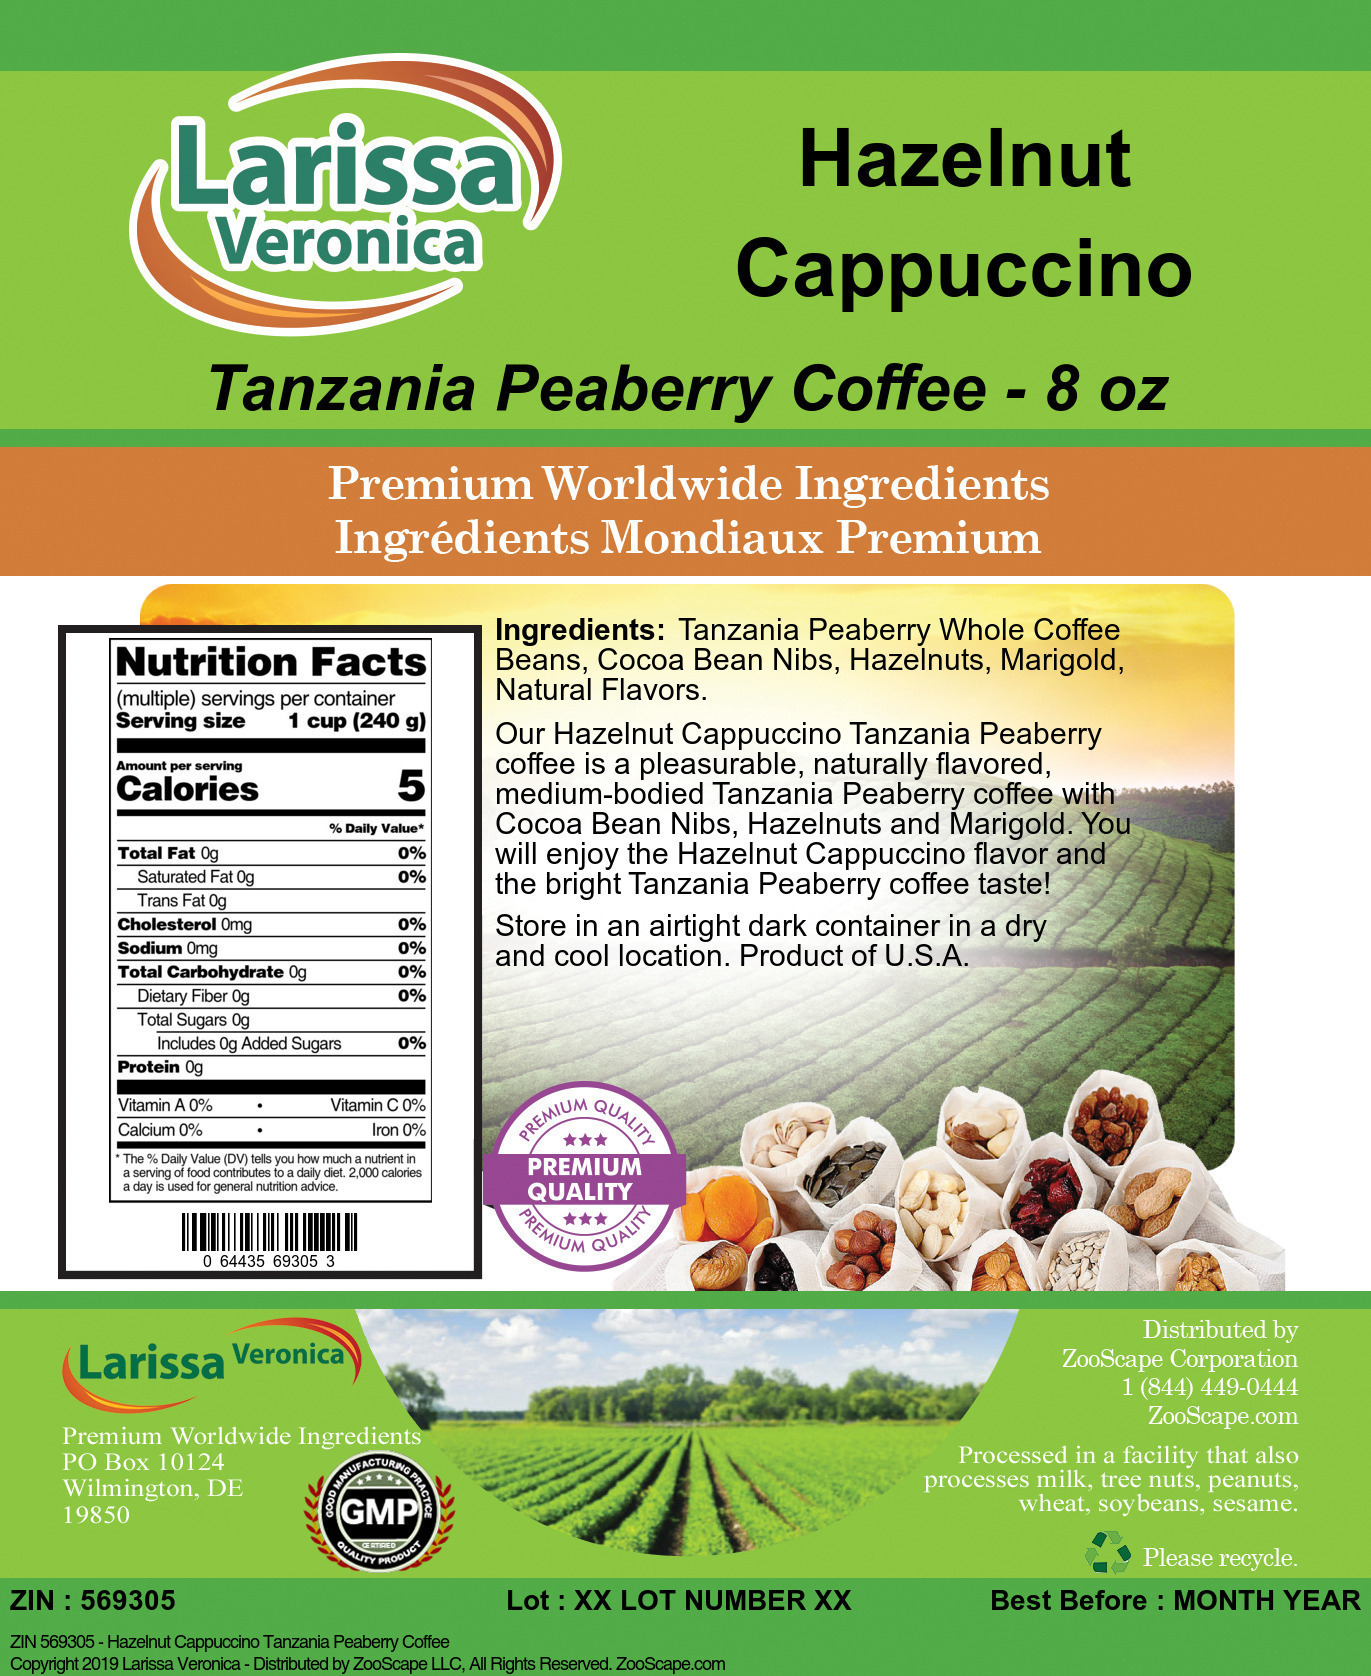 Hazelnut Cappuccino Tanzania Peaberry Coffee - Label